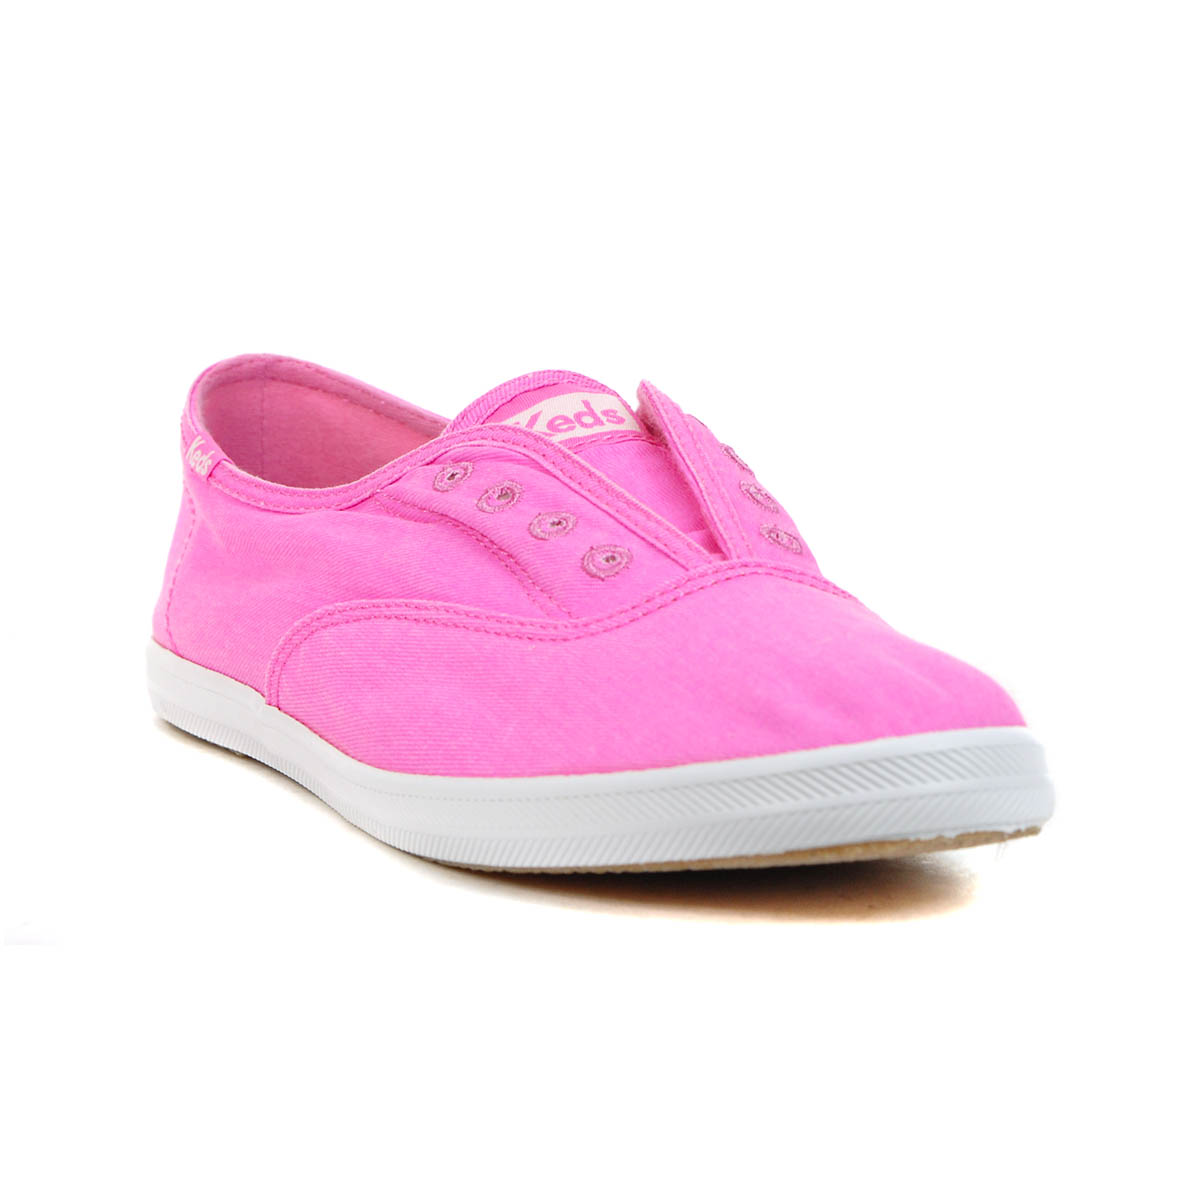 Keds Chillax Neon Pink Twill Slip-On Sneakers WF65905 - WOOKI.COM